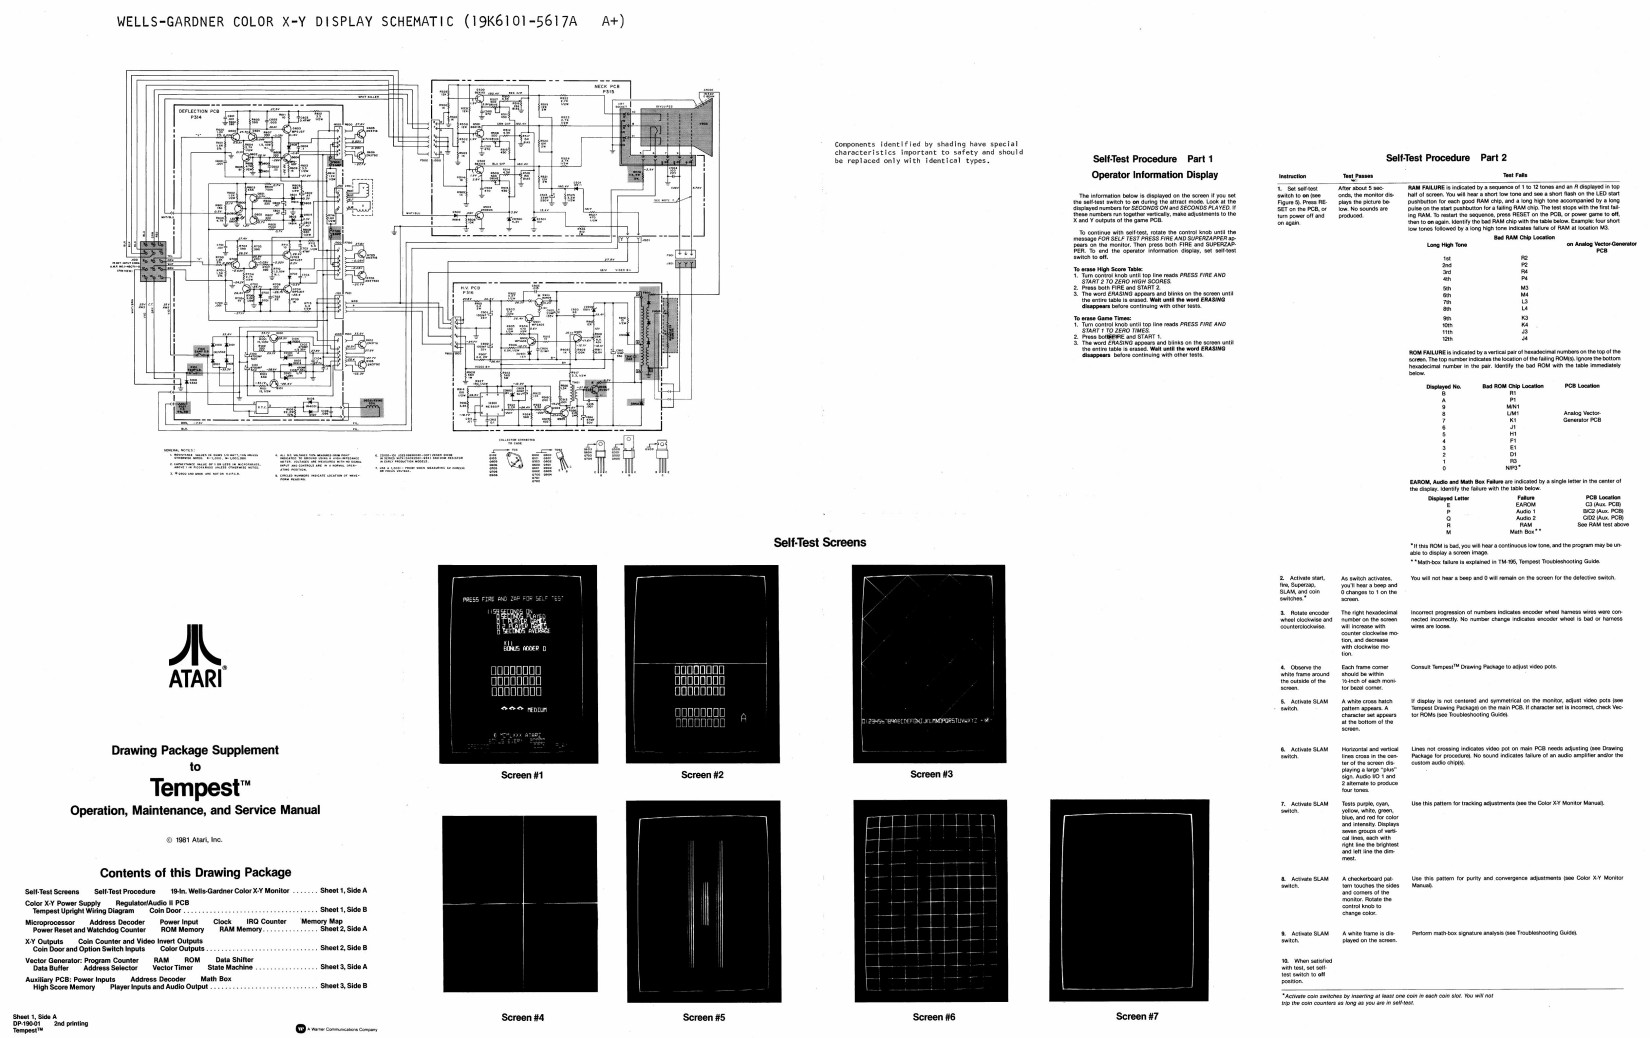 Tempest (DP-190 2nd Printing) (Drawing Package) (U)